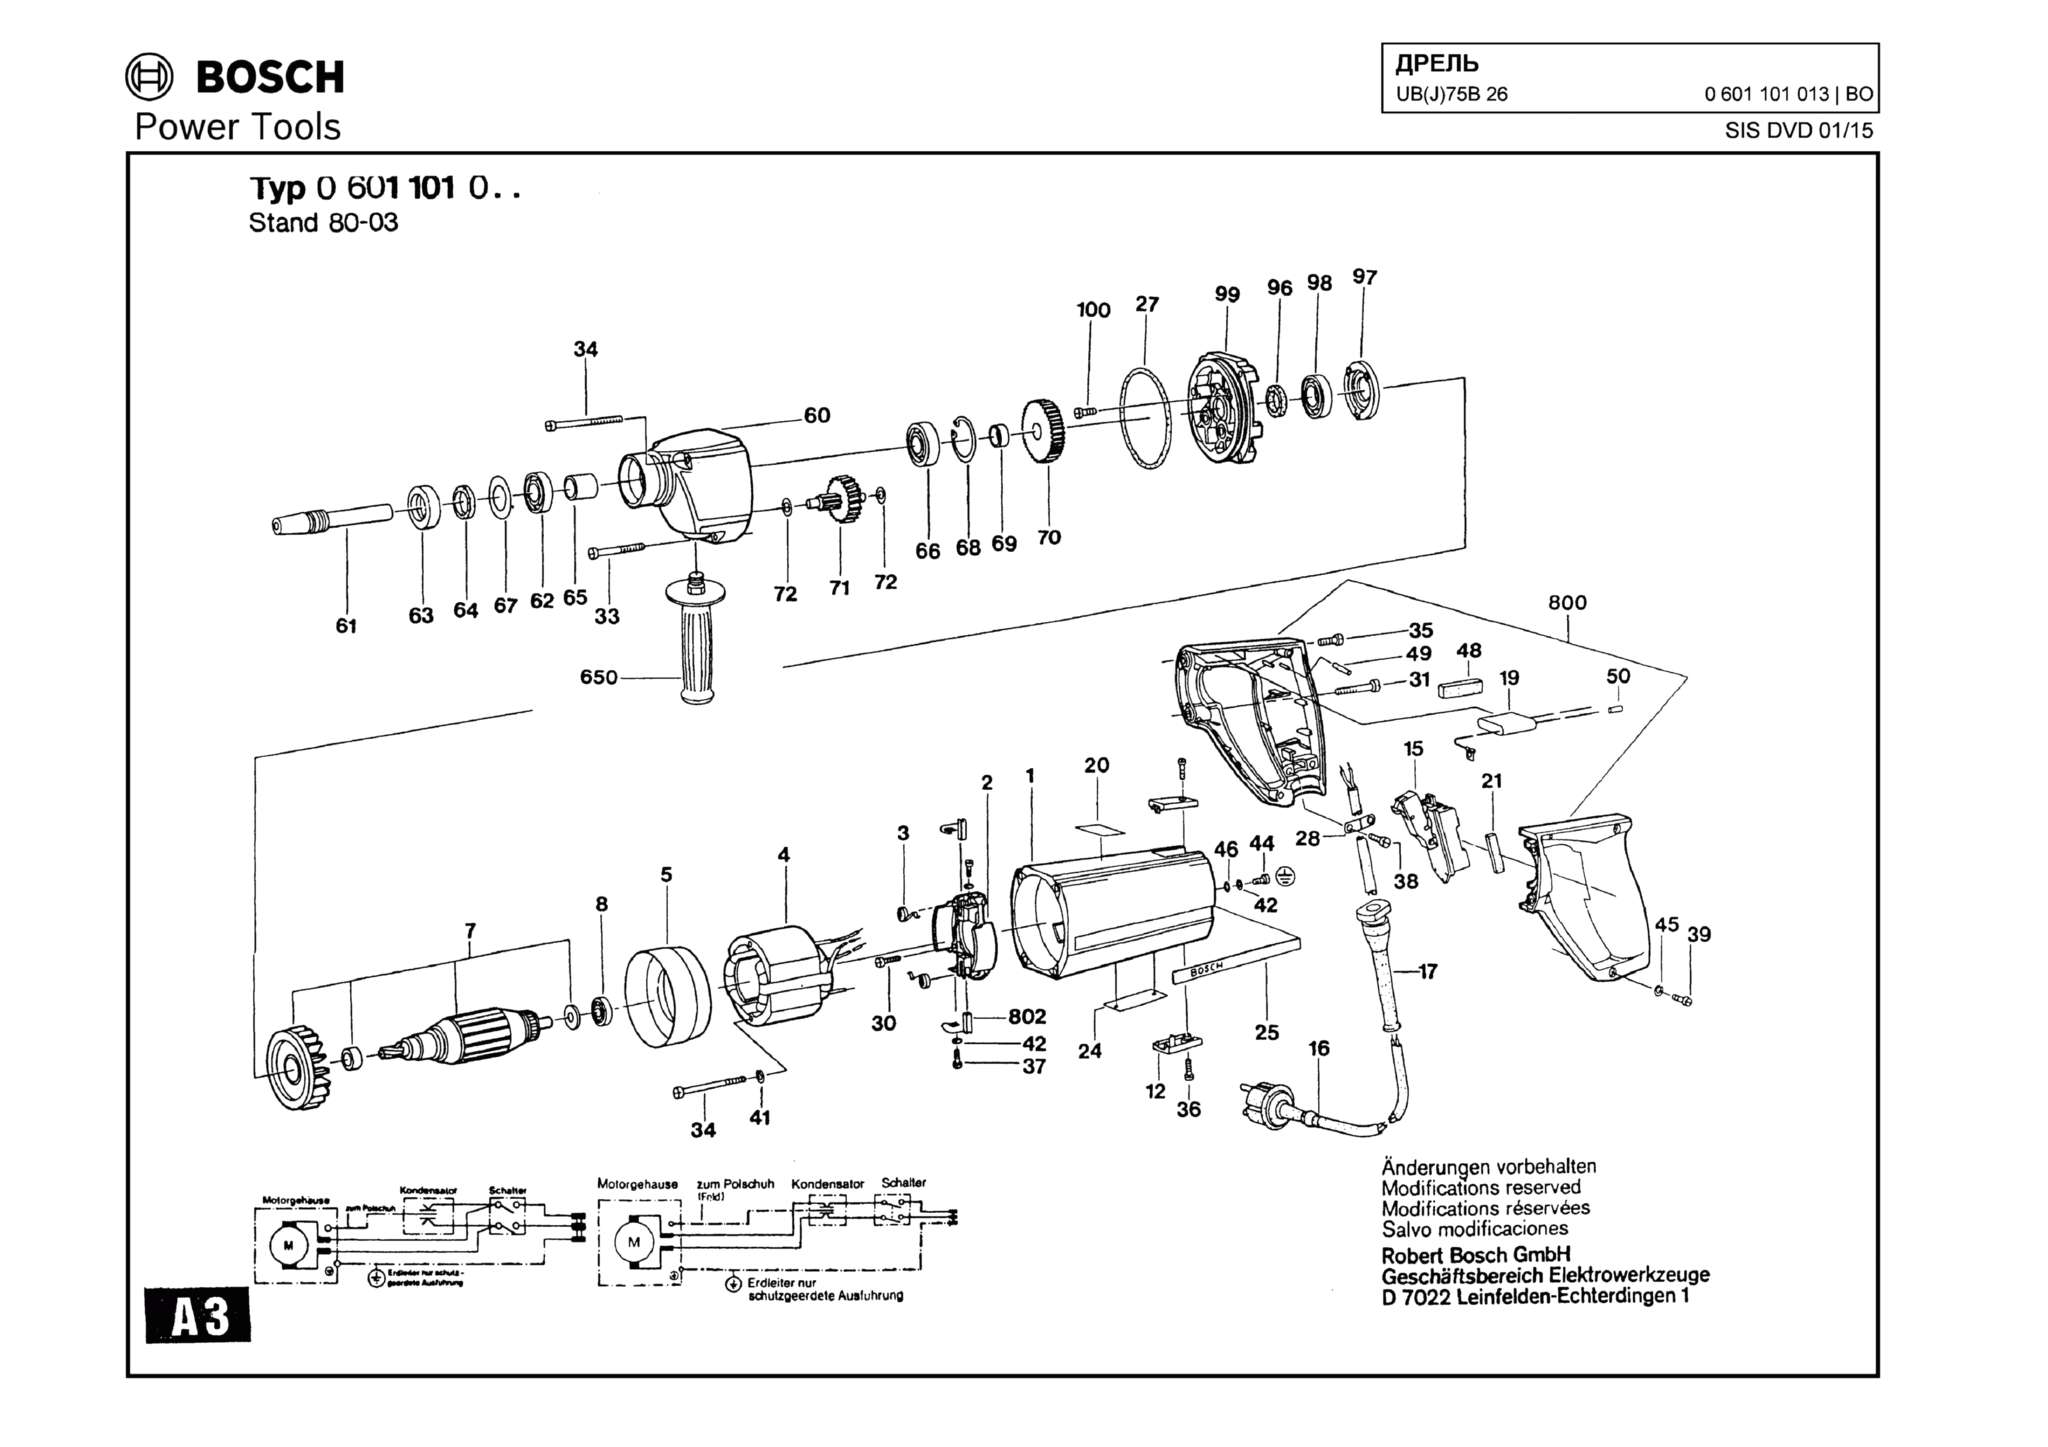 Запчасти, схема и деталировка Bosch UB(J)75B 26 (ТИП 0601101013)